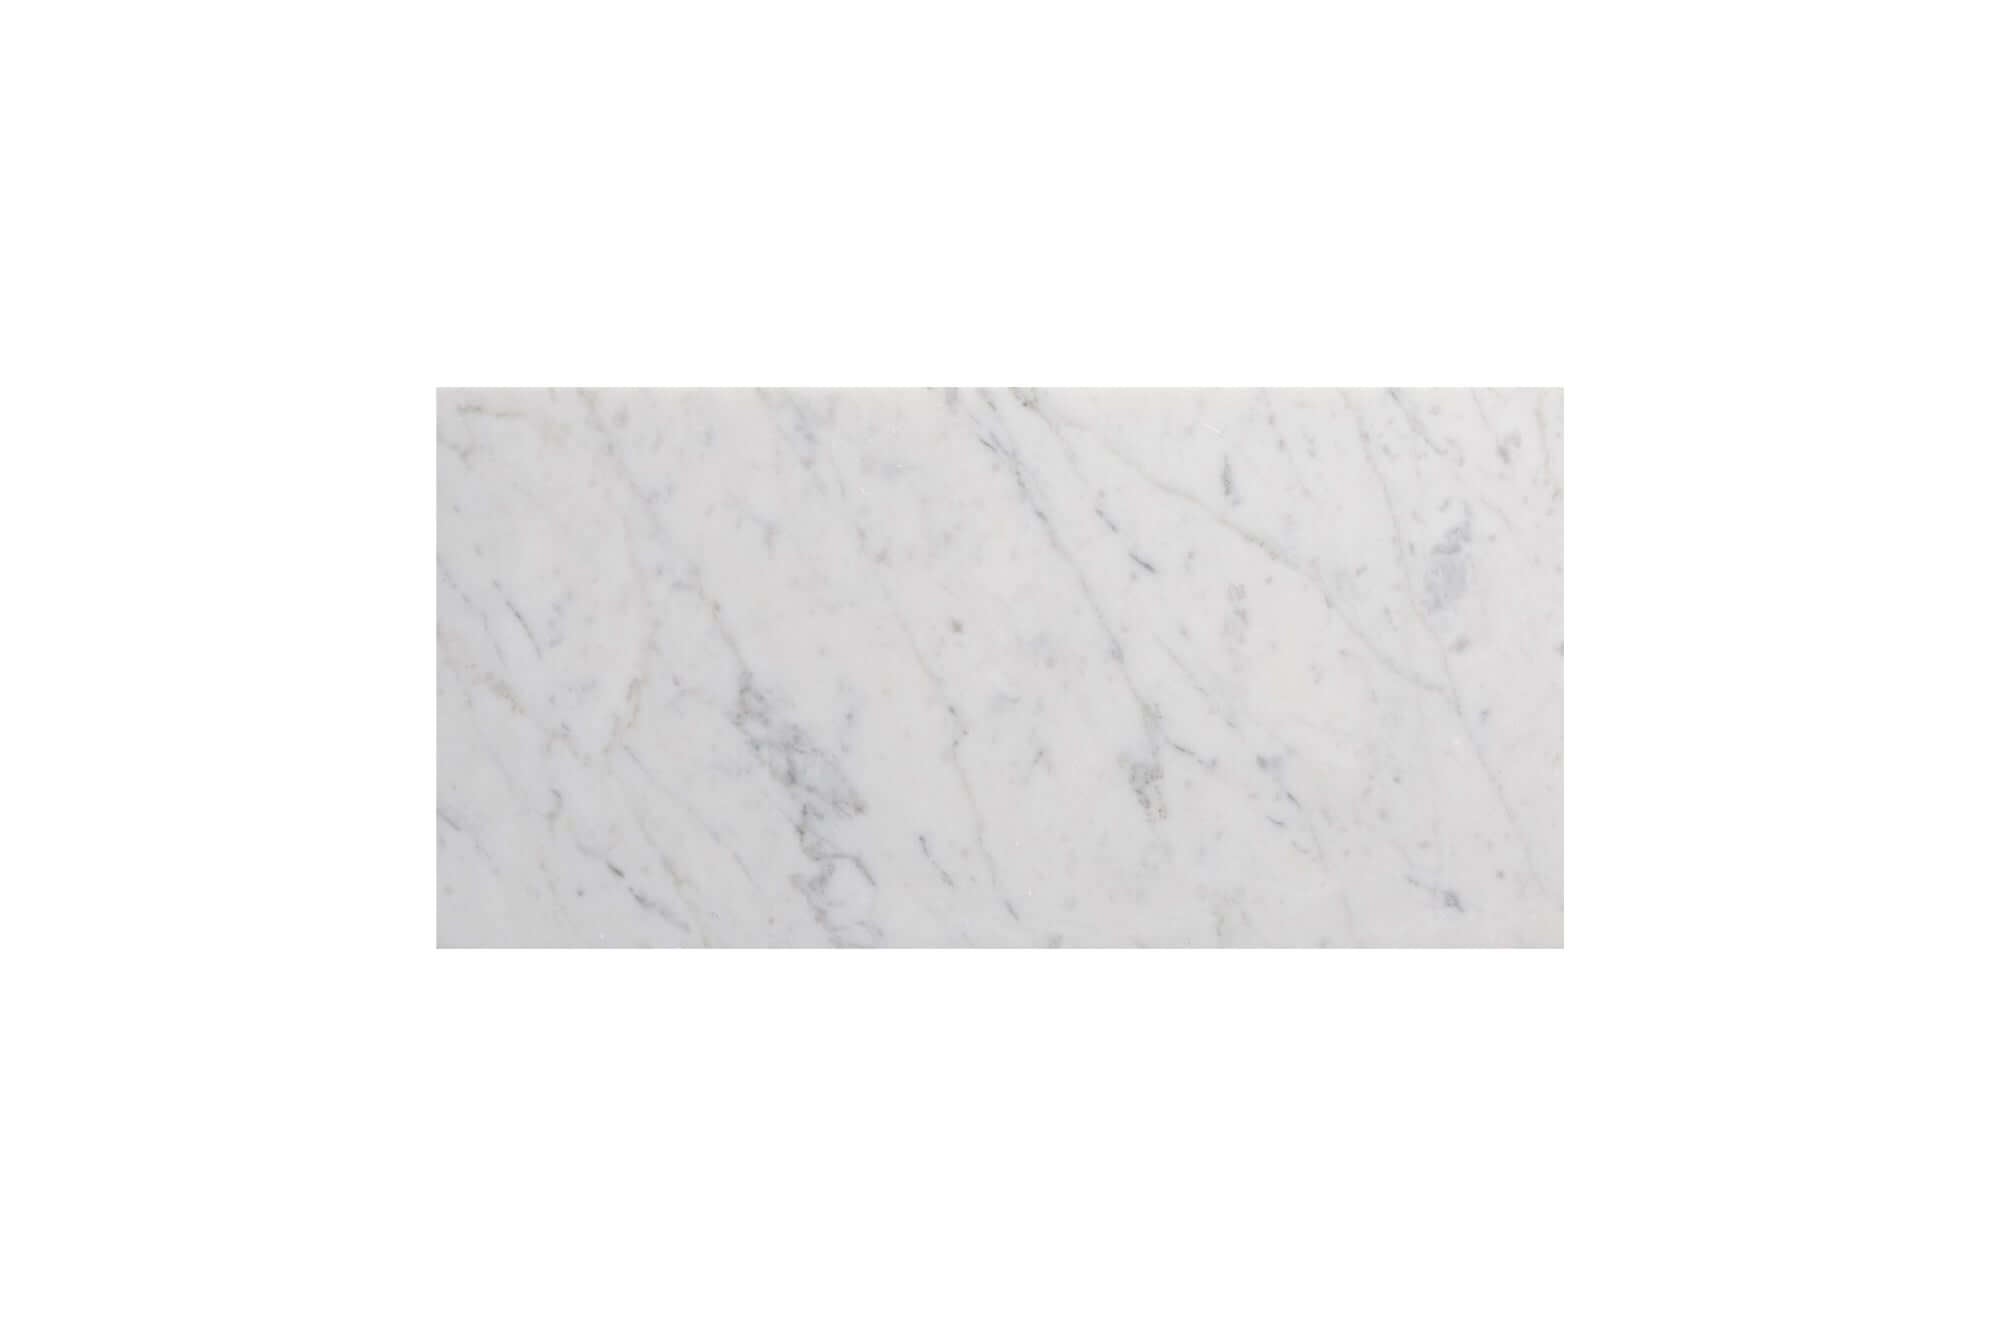 Bianco Carrara Marble Subway Tile 6 x 12 Honed